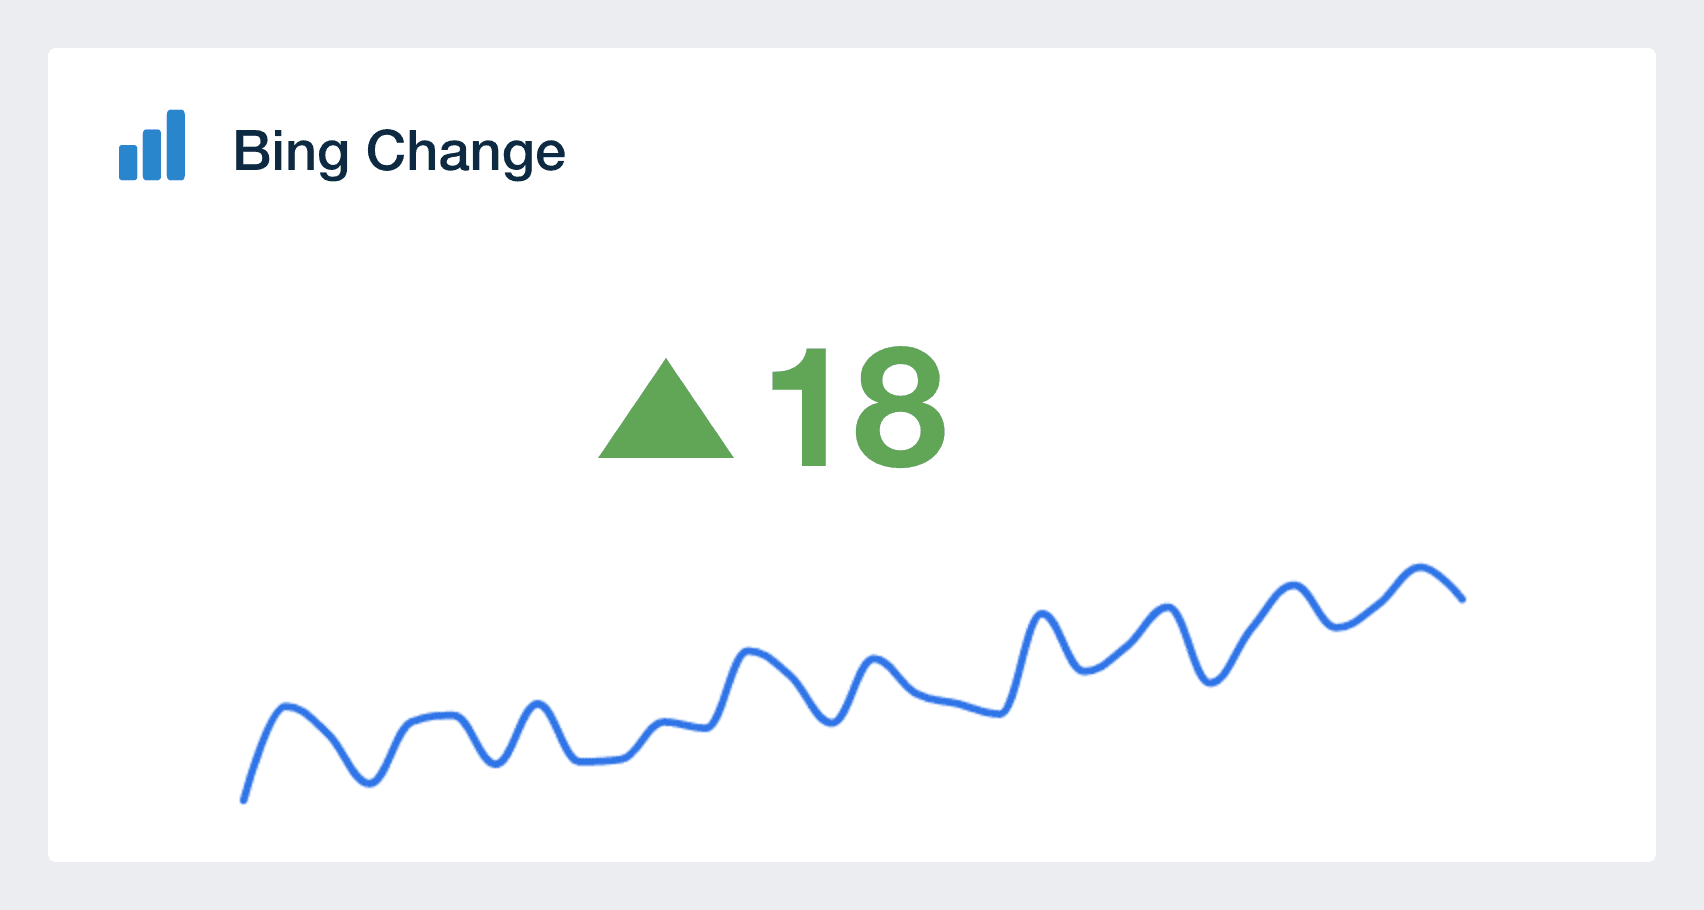 bing ads ranking change metric in dashboard